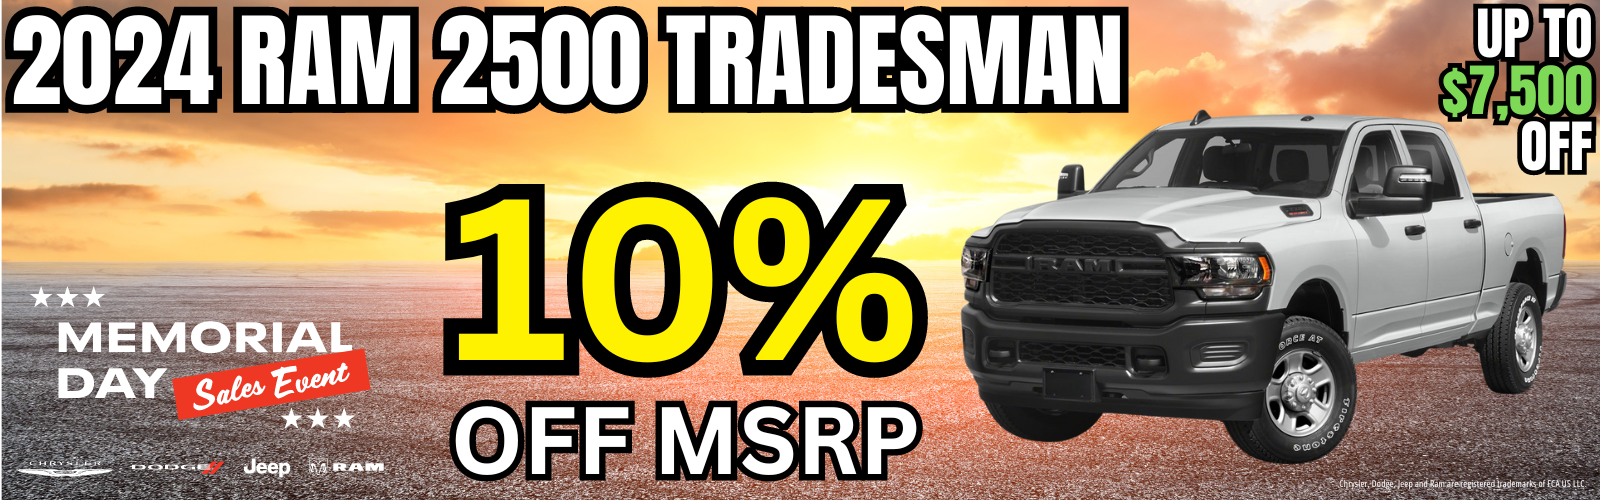 10% OFF MSRP - Ram 2500 Tradesman